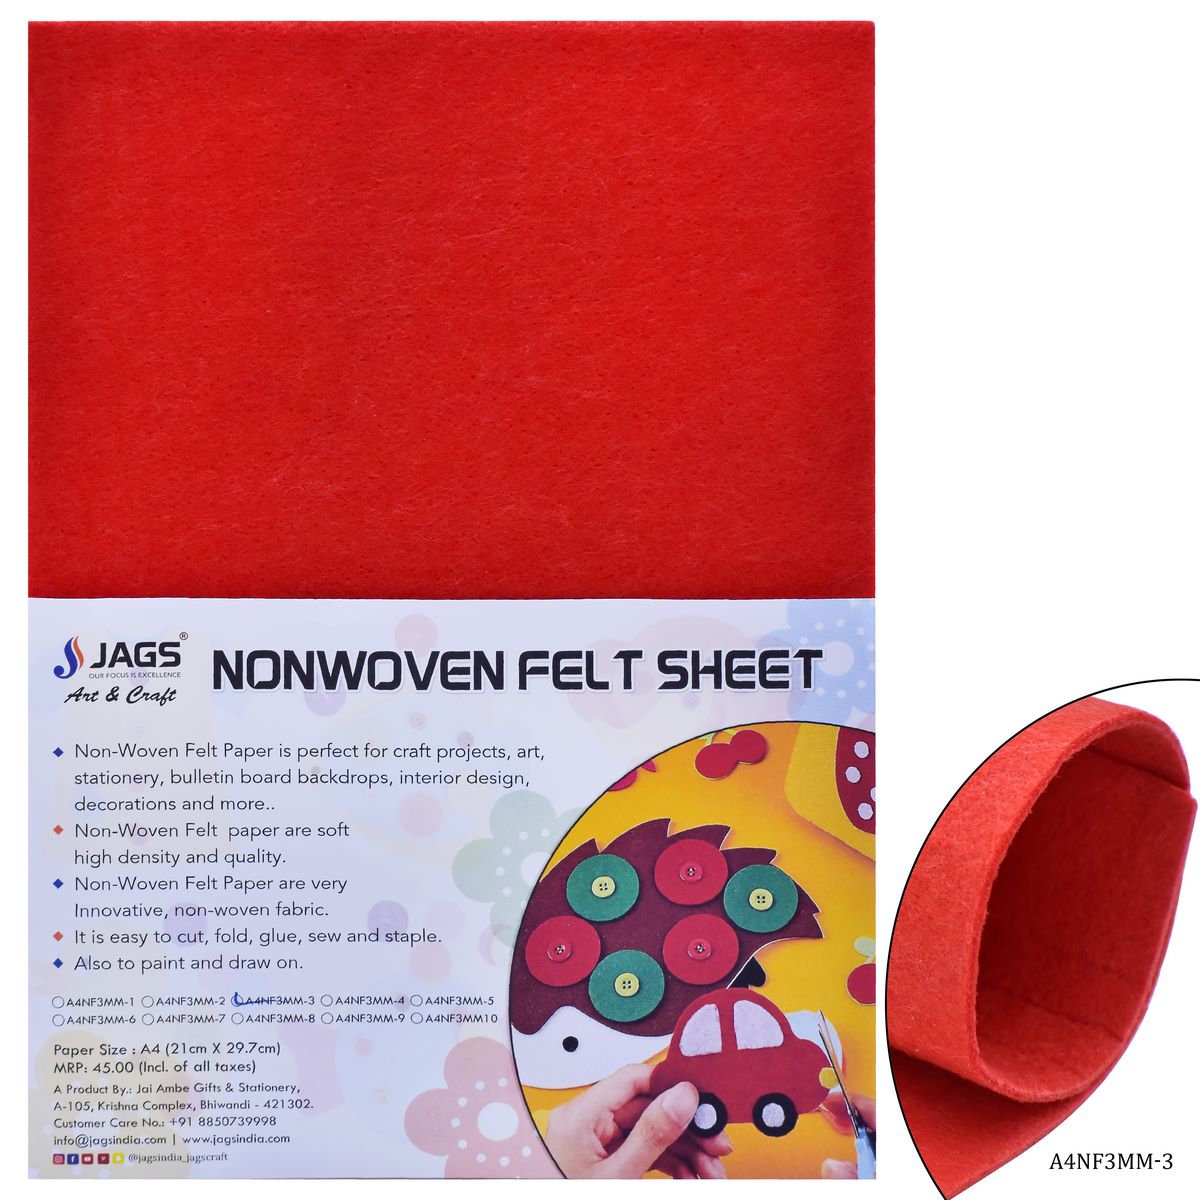 jags-mumbai Non-Woven & Felt Sheets A4 Nonwoven Felt Sheet 3 MM 1 Pcs Red